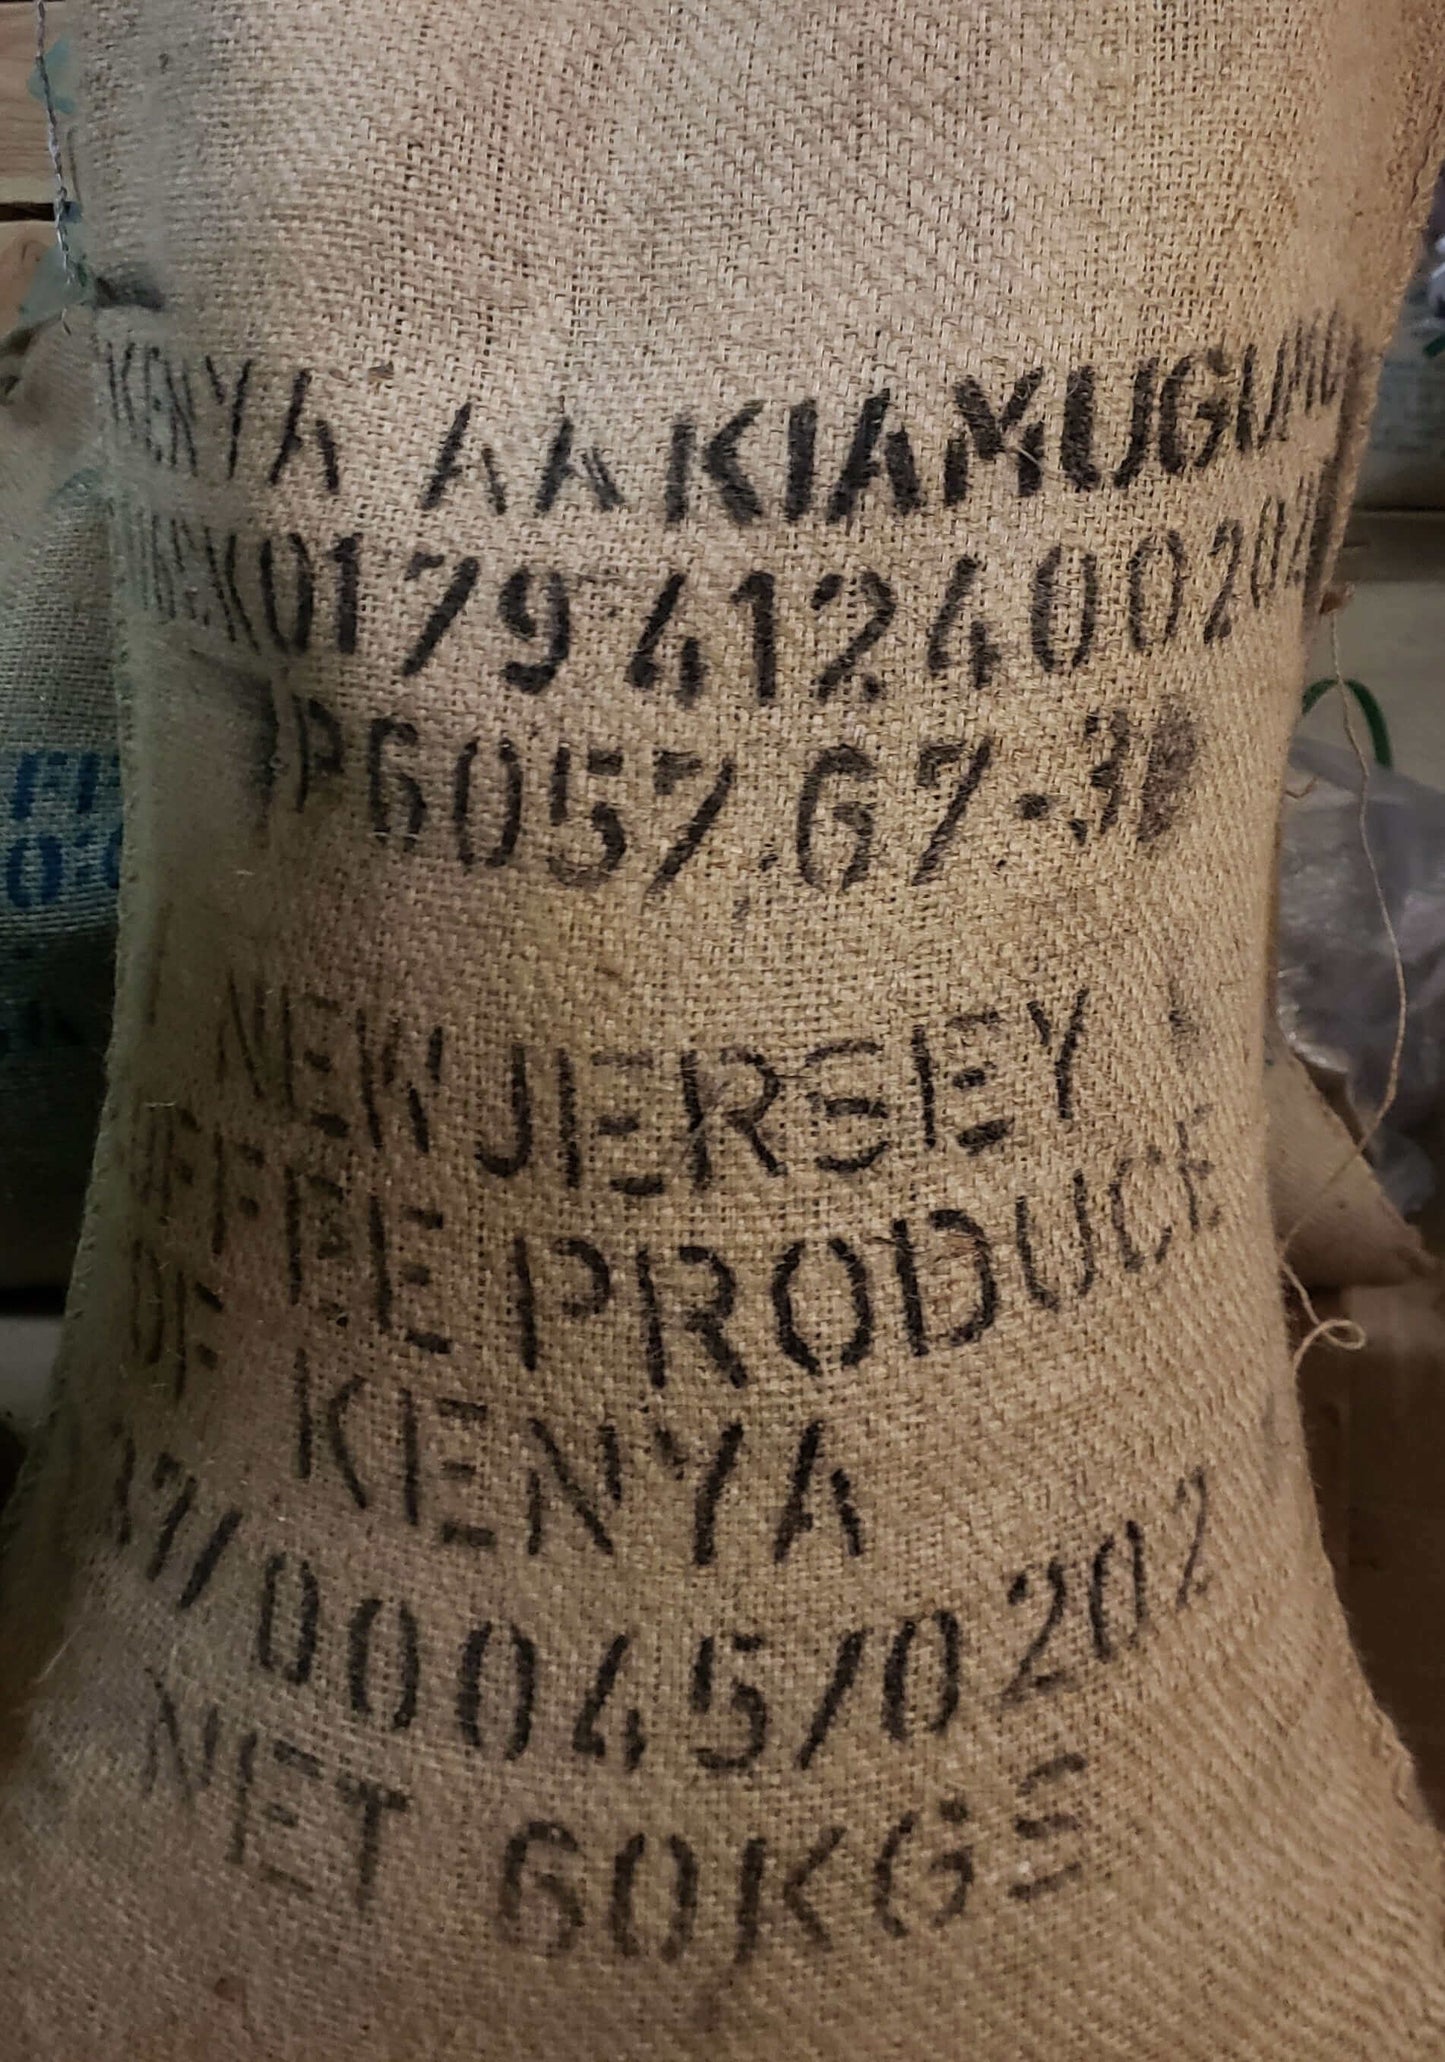 Kenya Kiamgumo